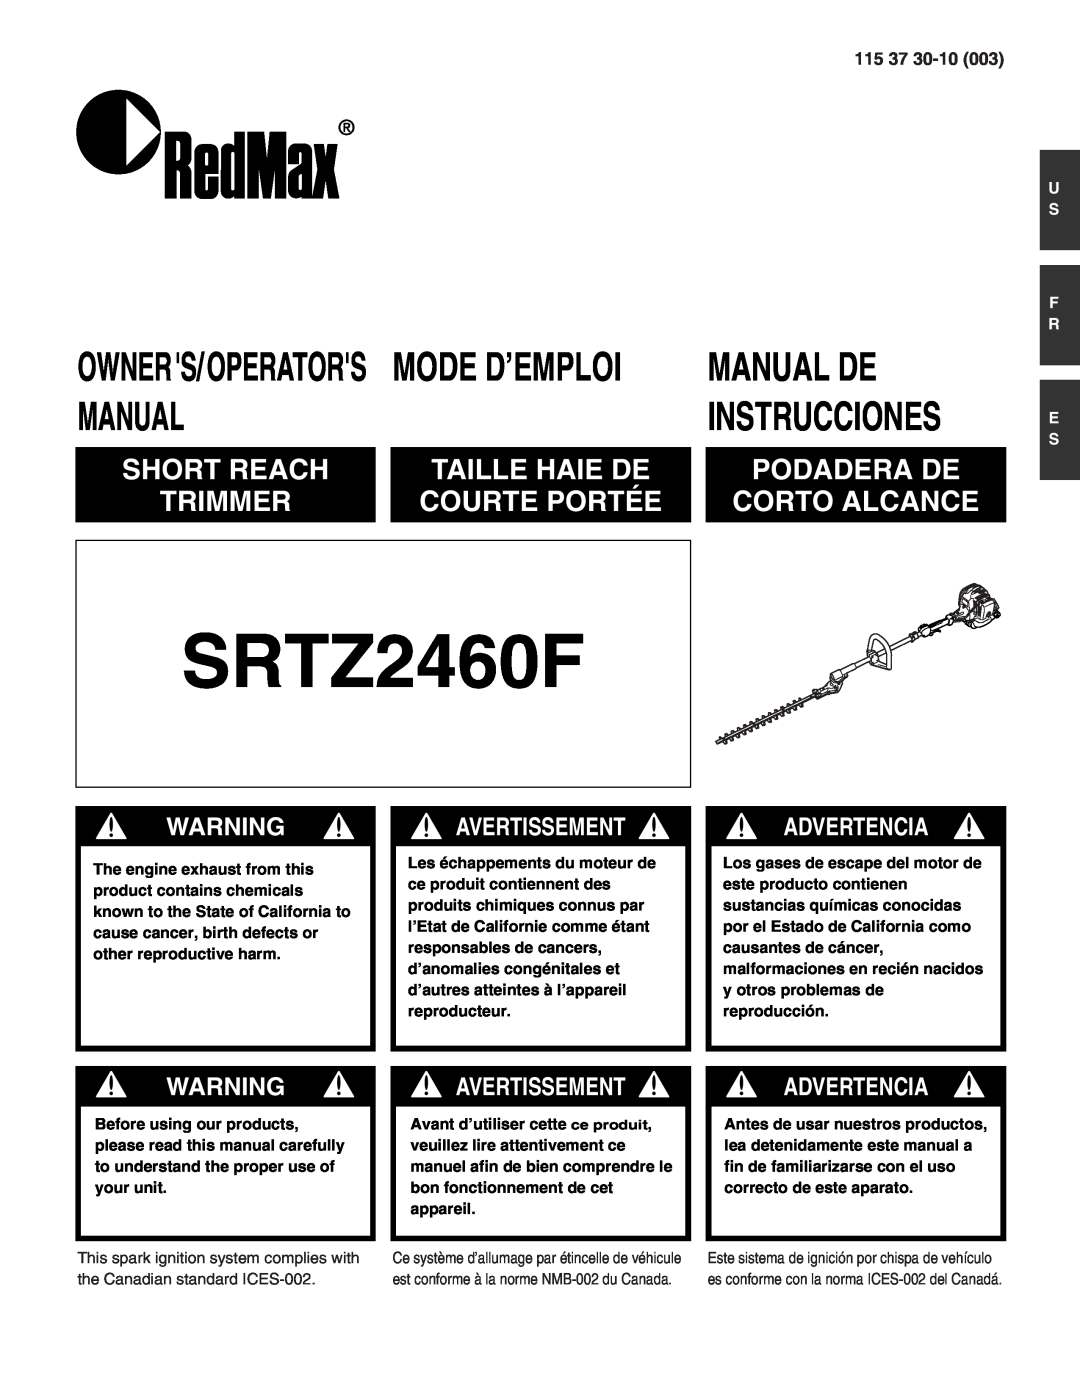 RedMax SRTZ2460F manual Short Reach, Taille Haie De, Podadera De, Trimmer, Courte Portée, Corto Alcance, 115, U S F R E S 